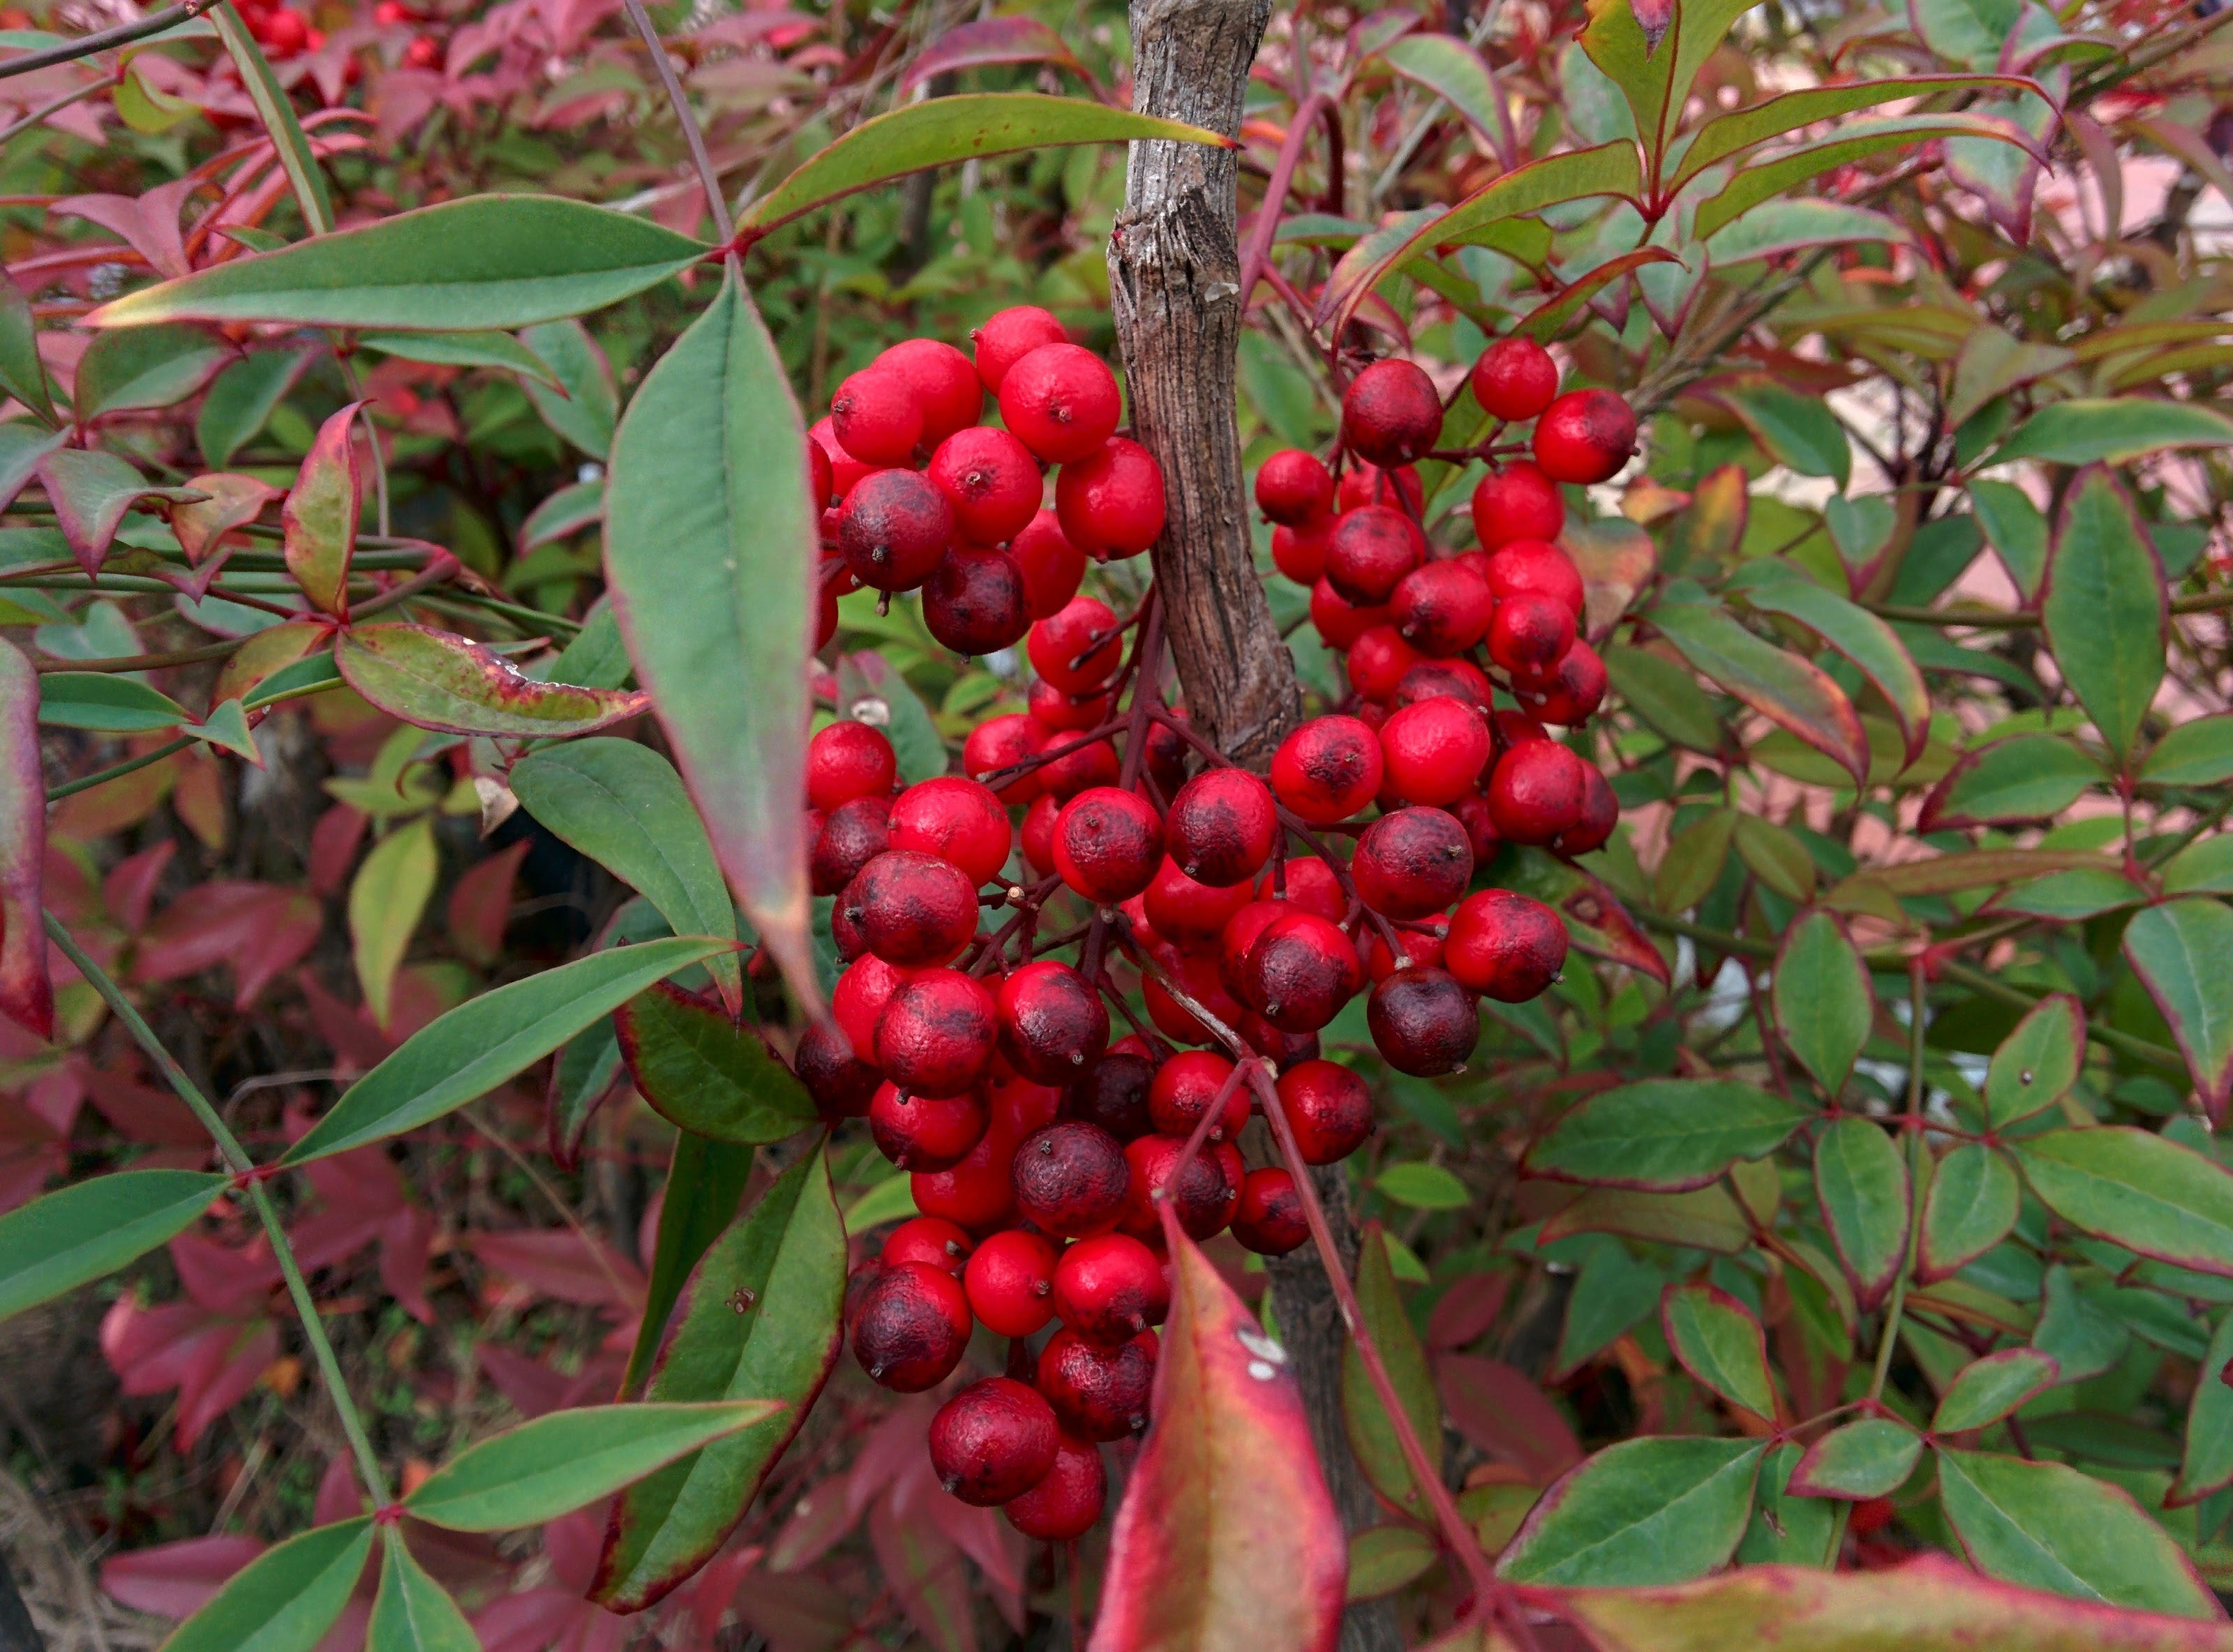 IMG_20151130_105252.jpg 가로변에 붉게 익어가는 남천나무 열매